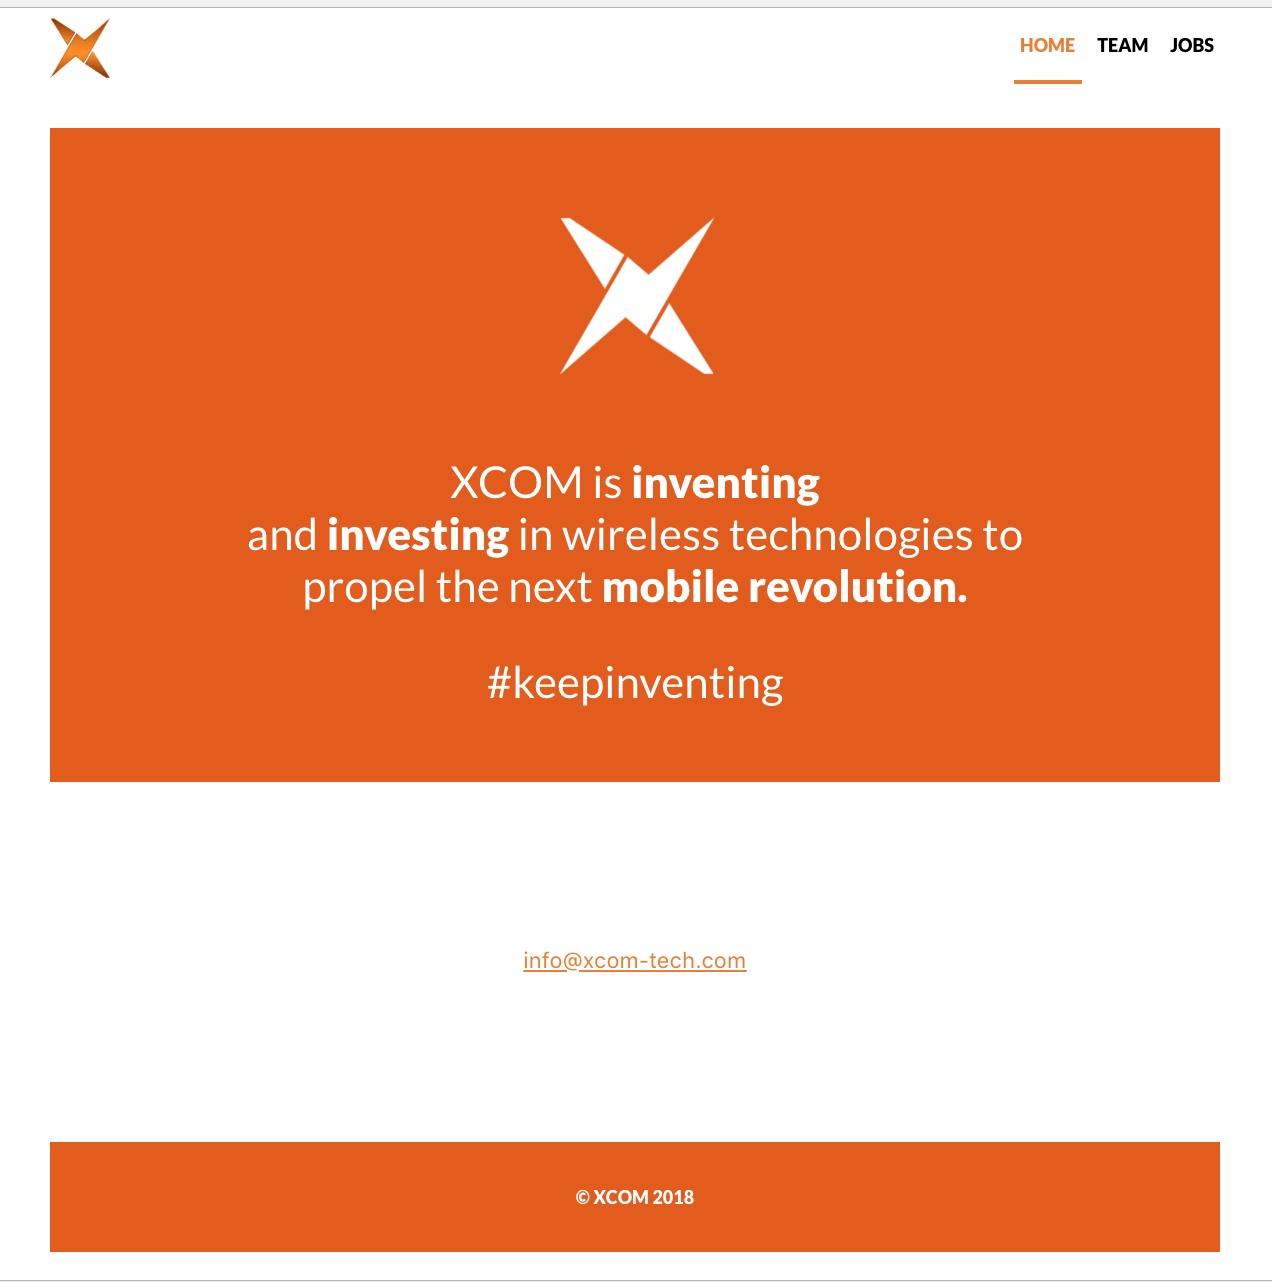 Startup XCOM